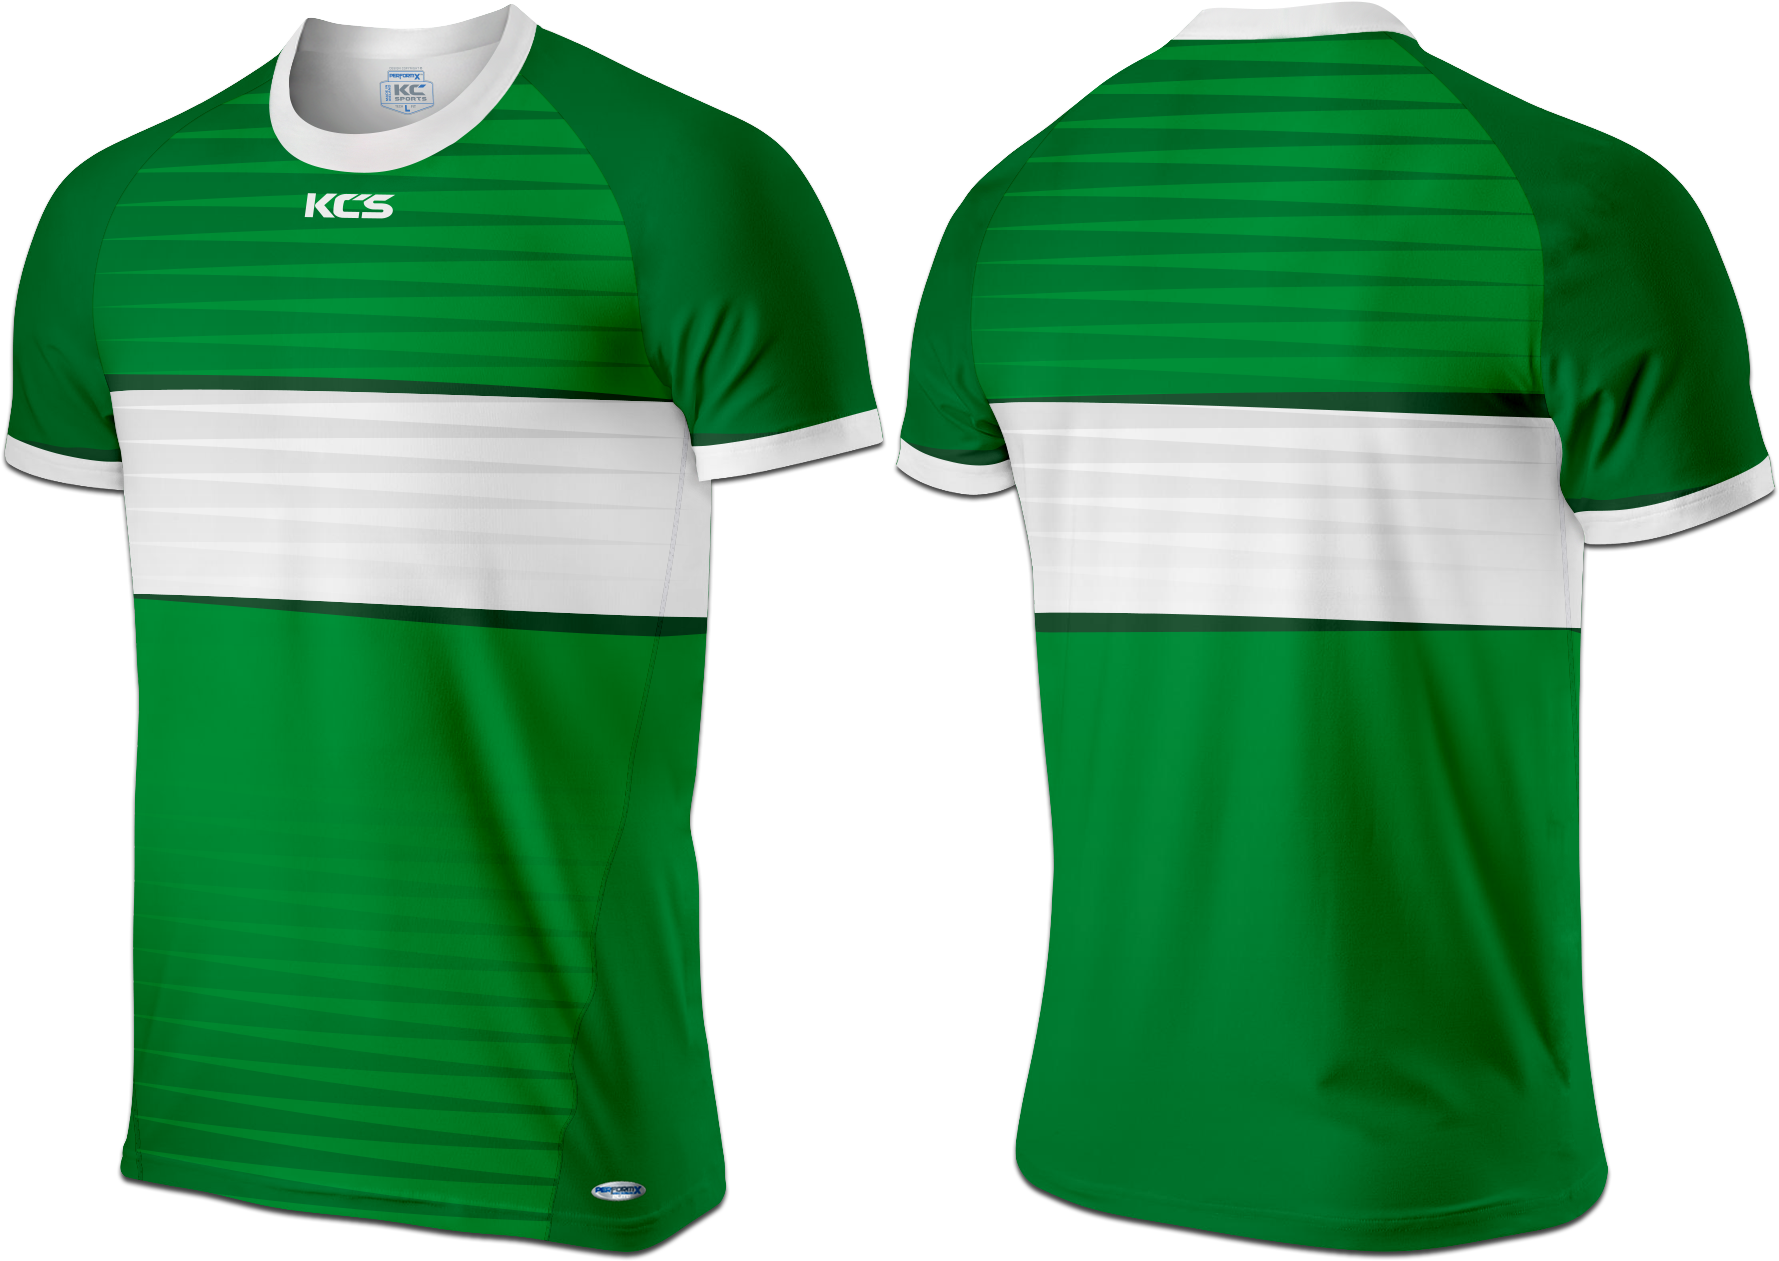 Kcs Ty Jersey Design - Football Jersey Design White (1800x1800)